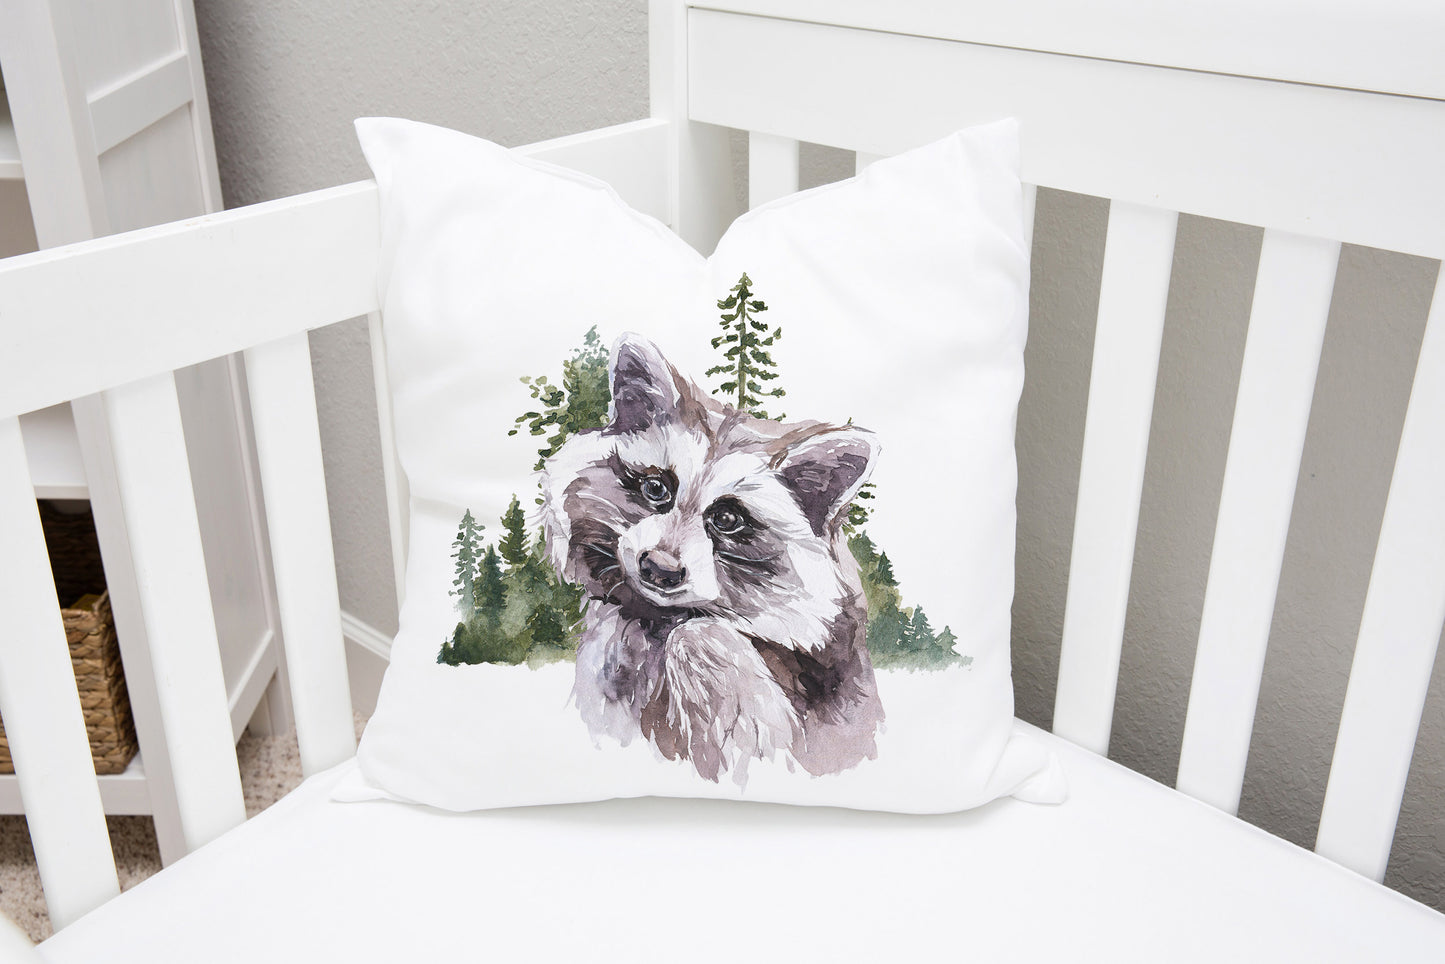 Raccoon Pillow Cover Double-Sided, Woodland Nursery Decor - Wild Woodland